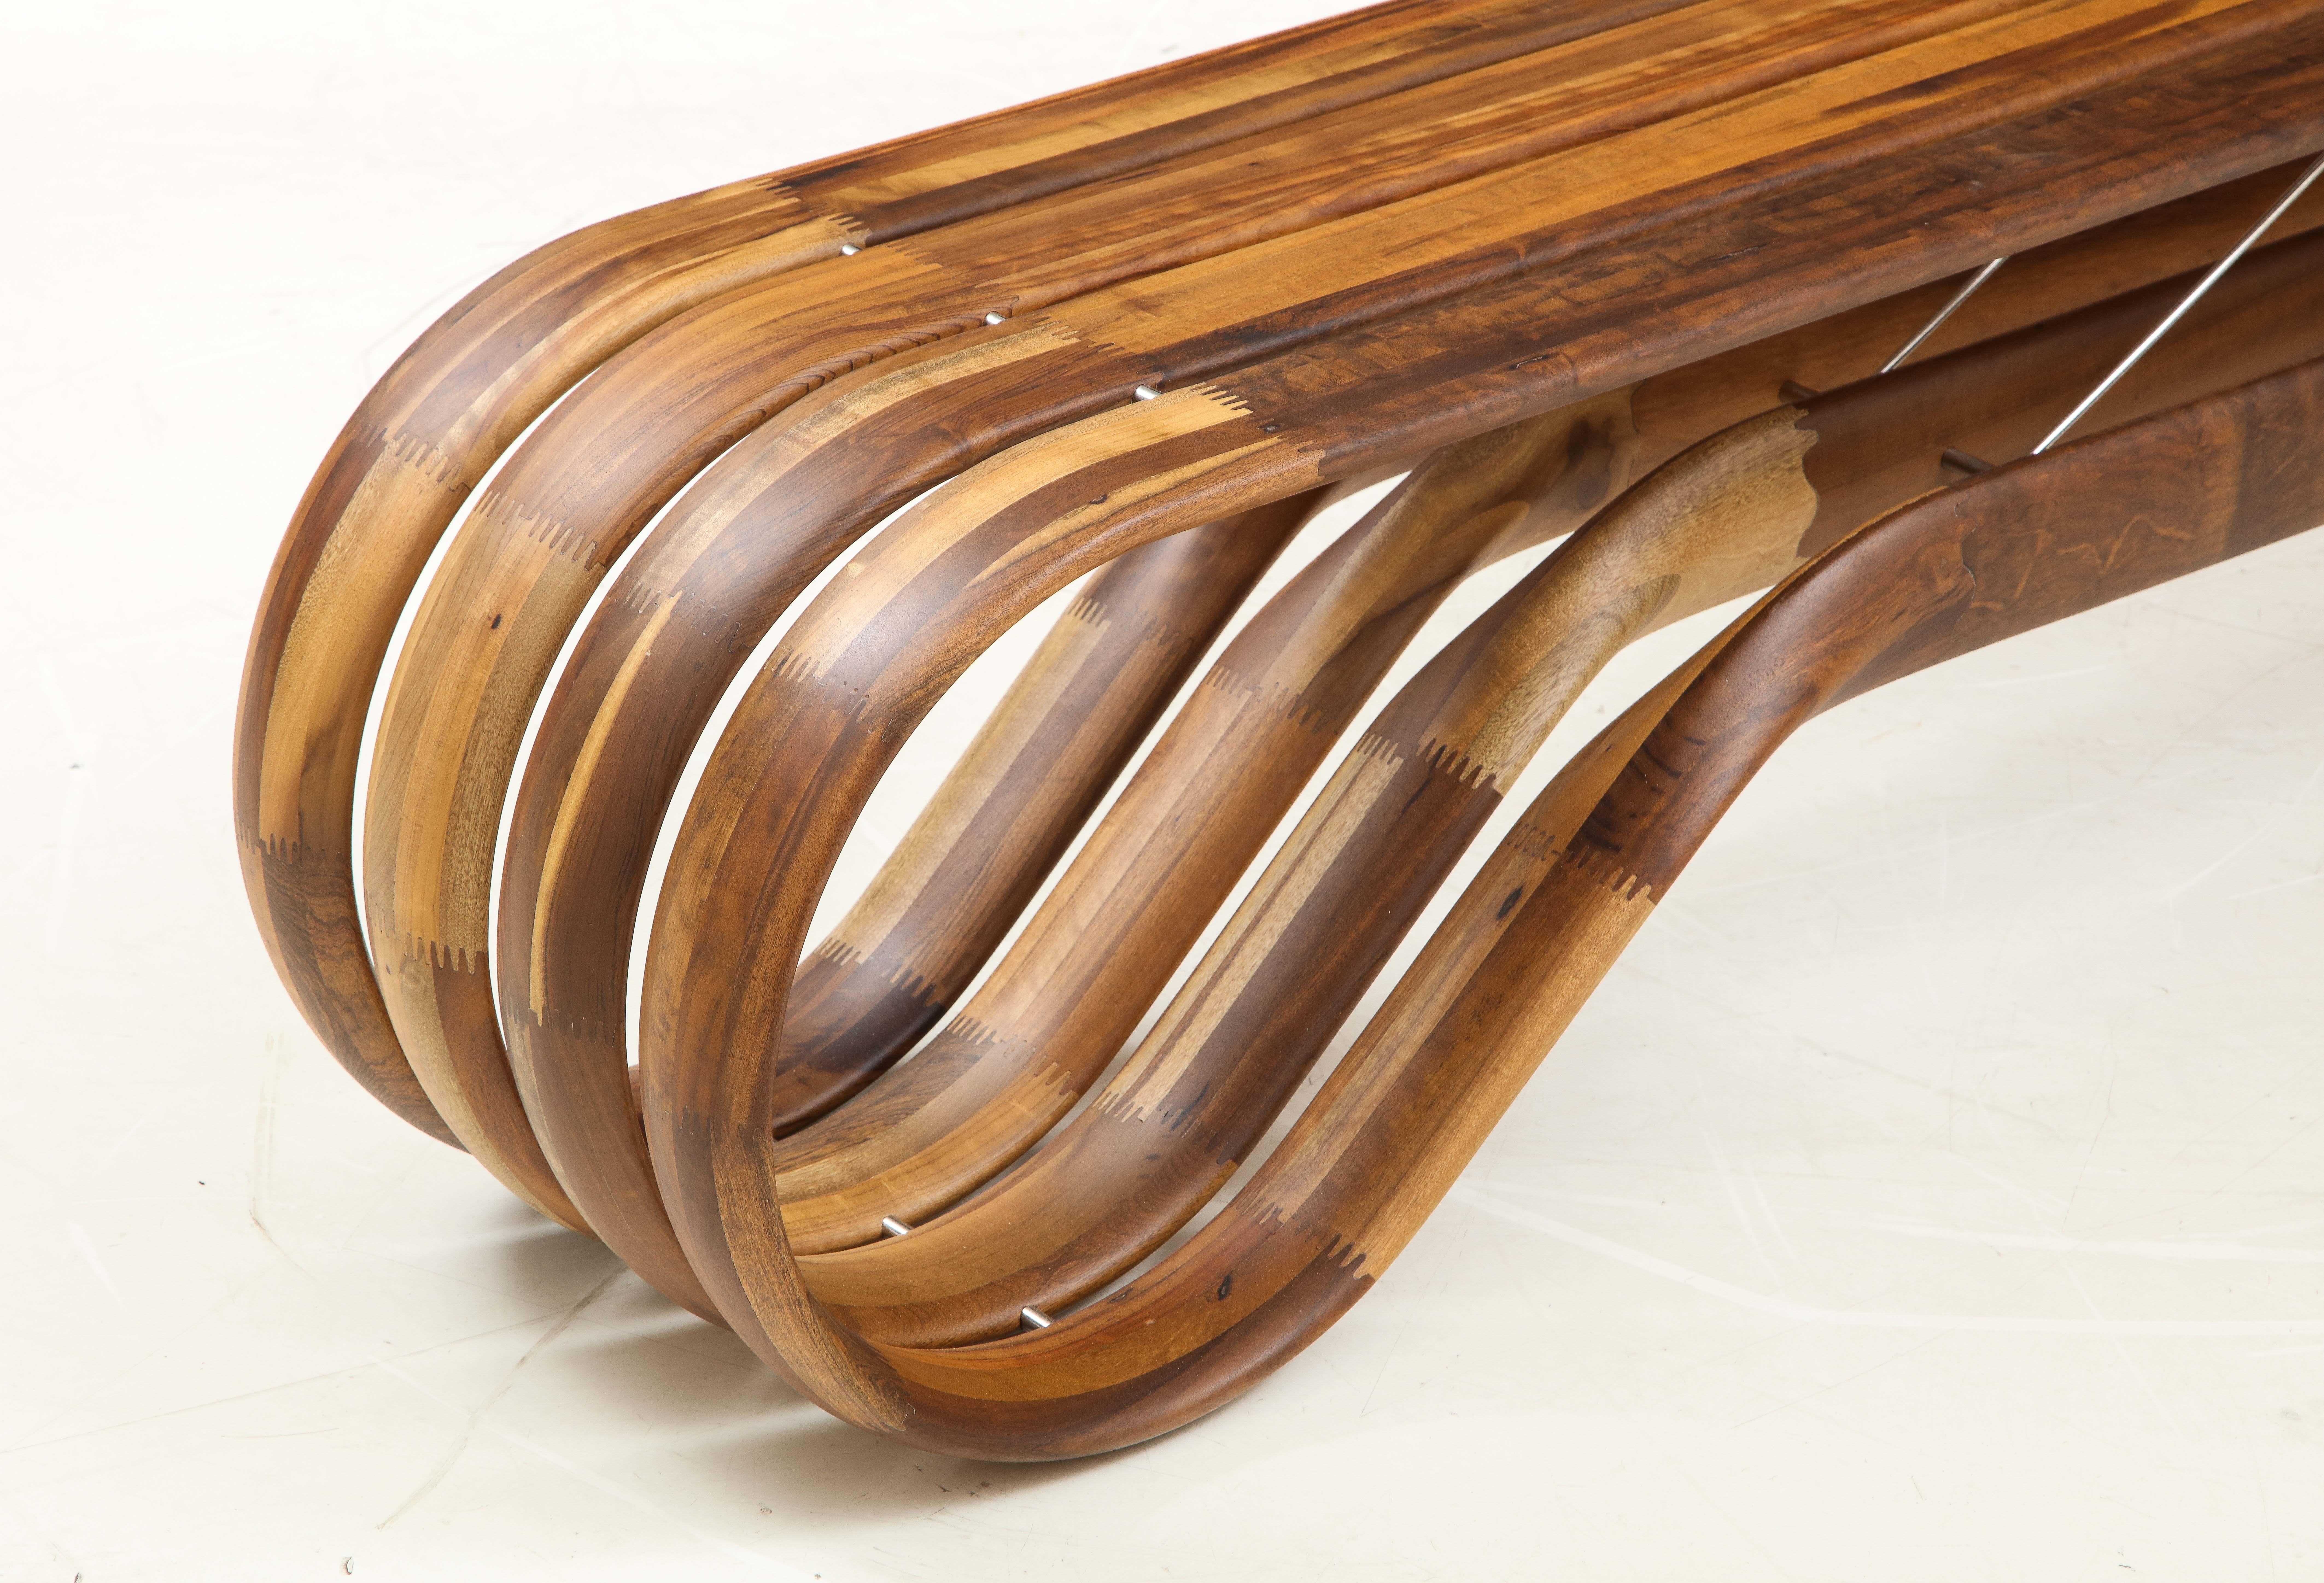 Other Contemporary Infinito Wood Bench by Guto Índio da Costa, Brazil, 2019